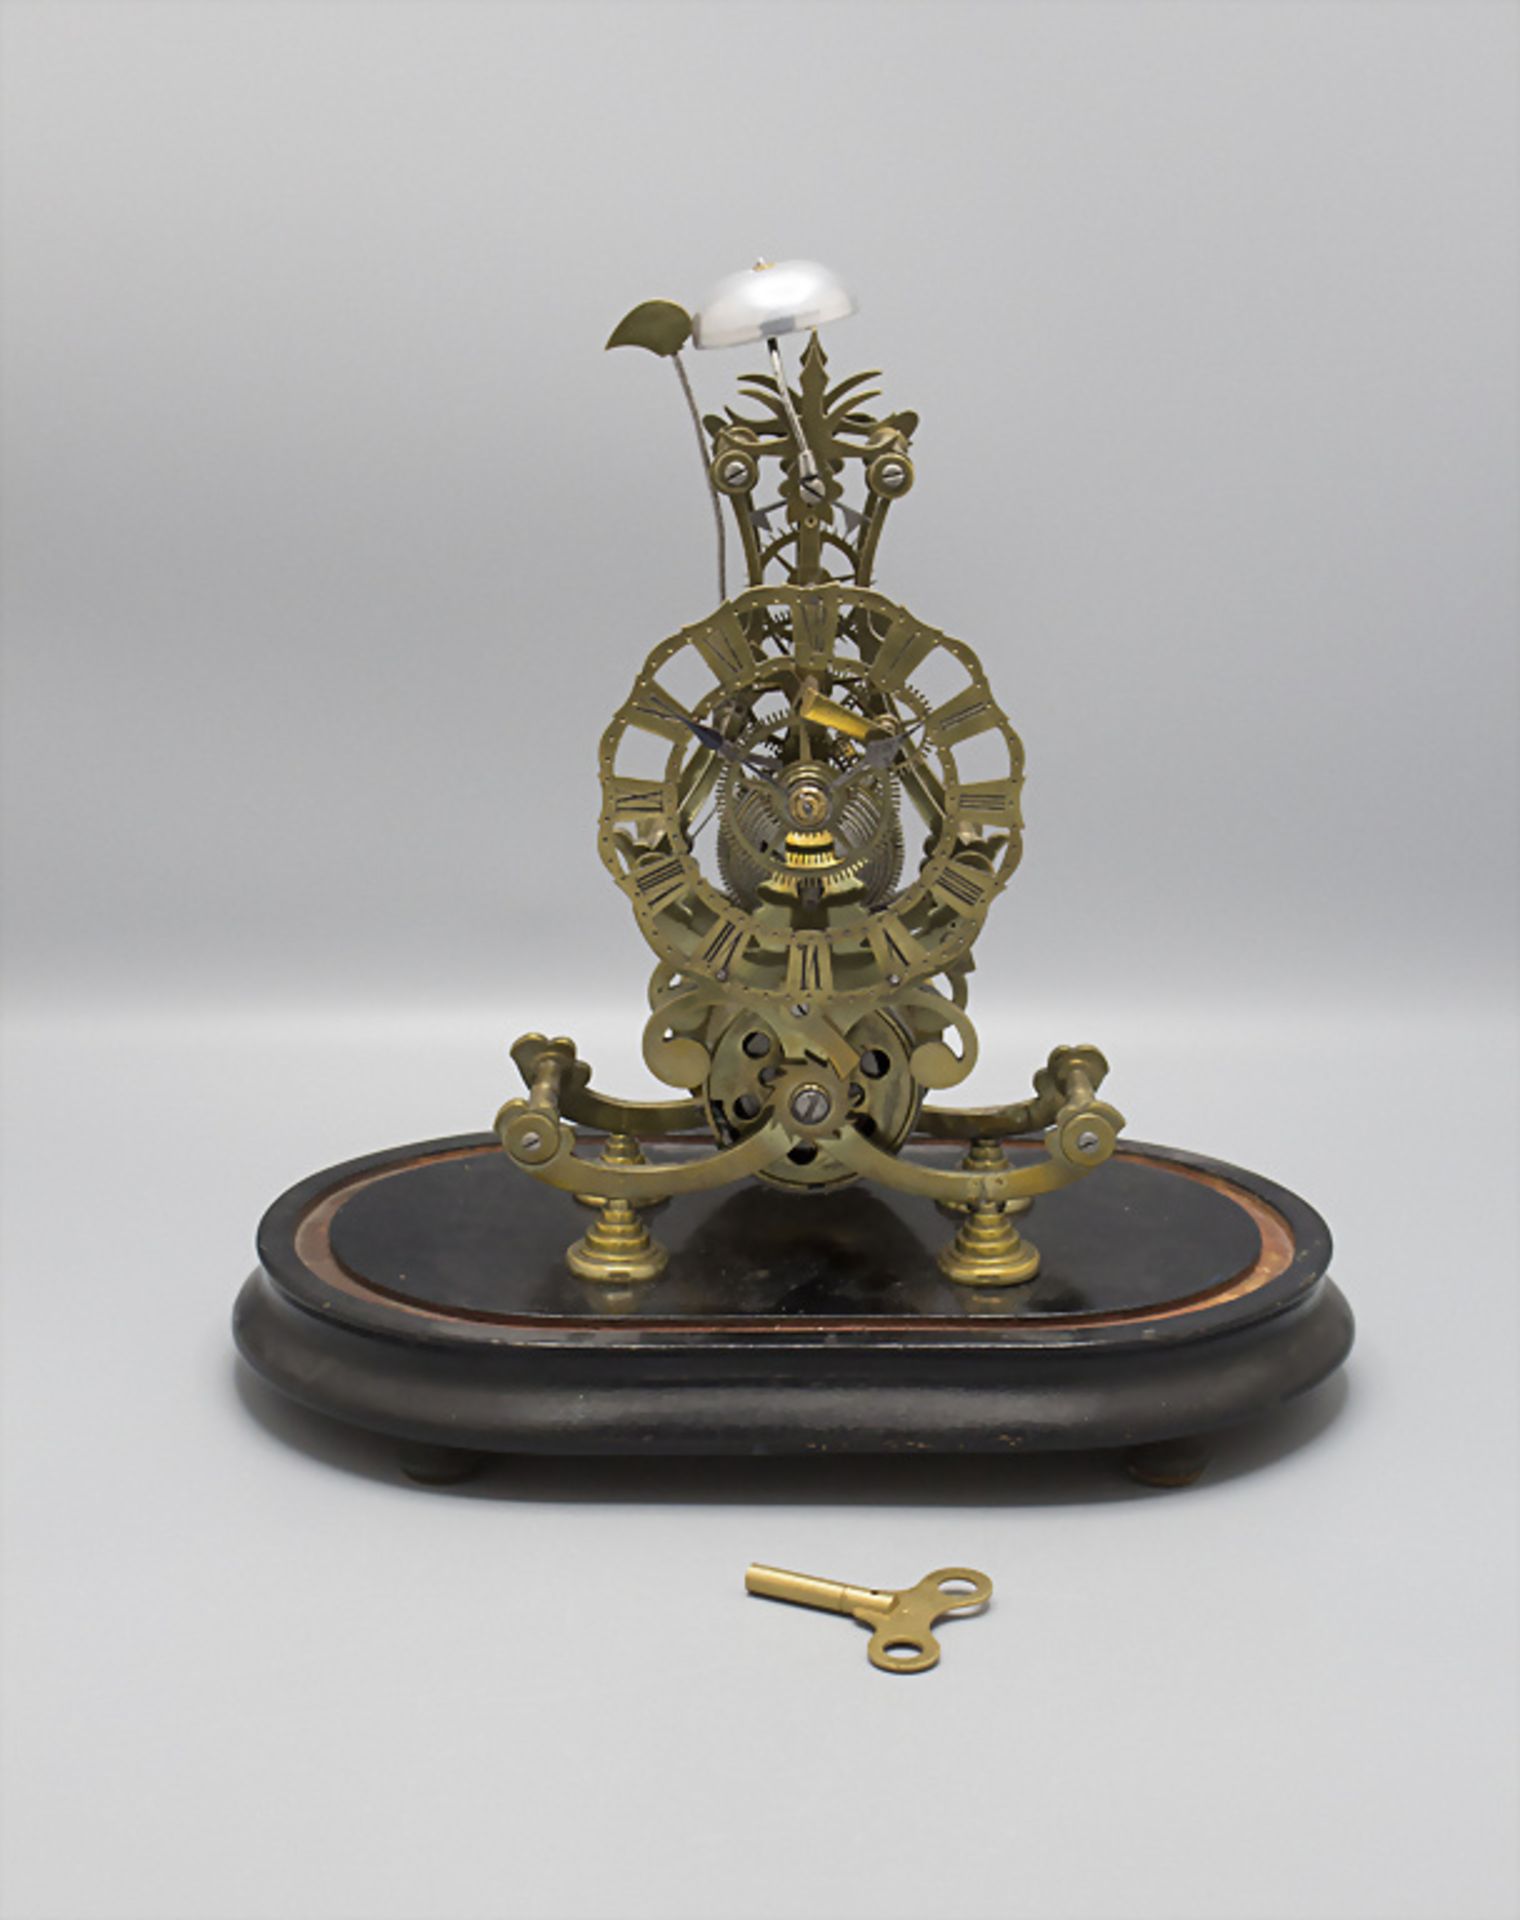 Skelettuhr / A skeleton clock, England, 19. Jh.